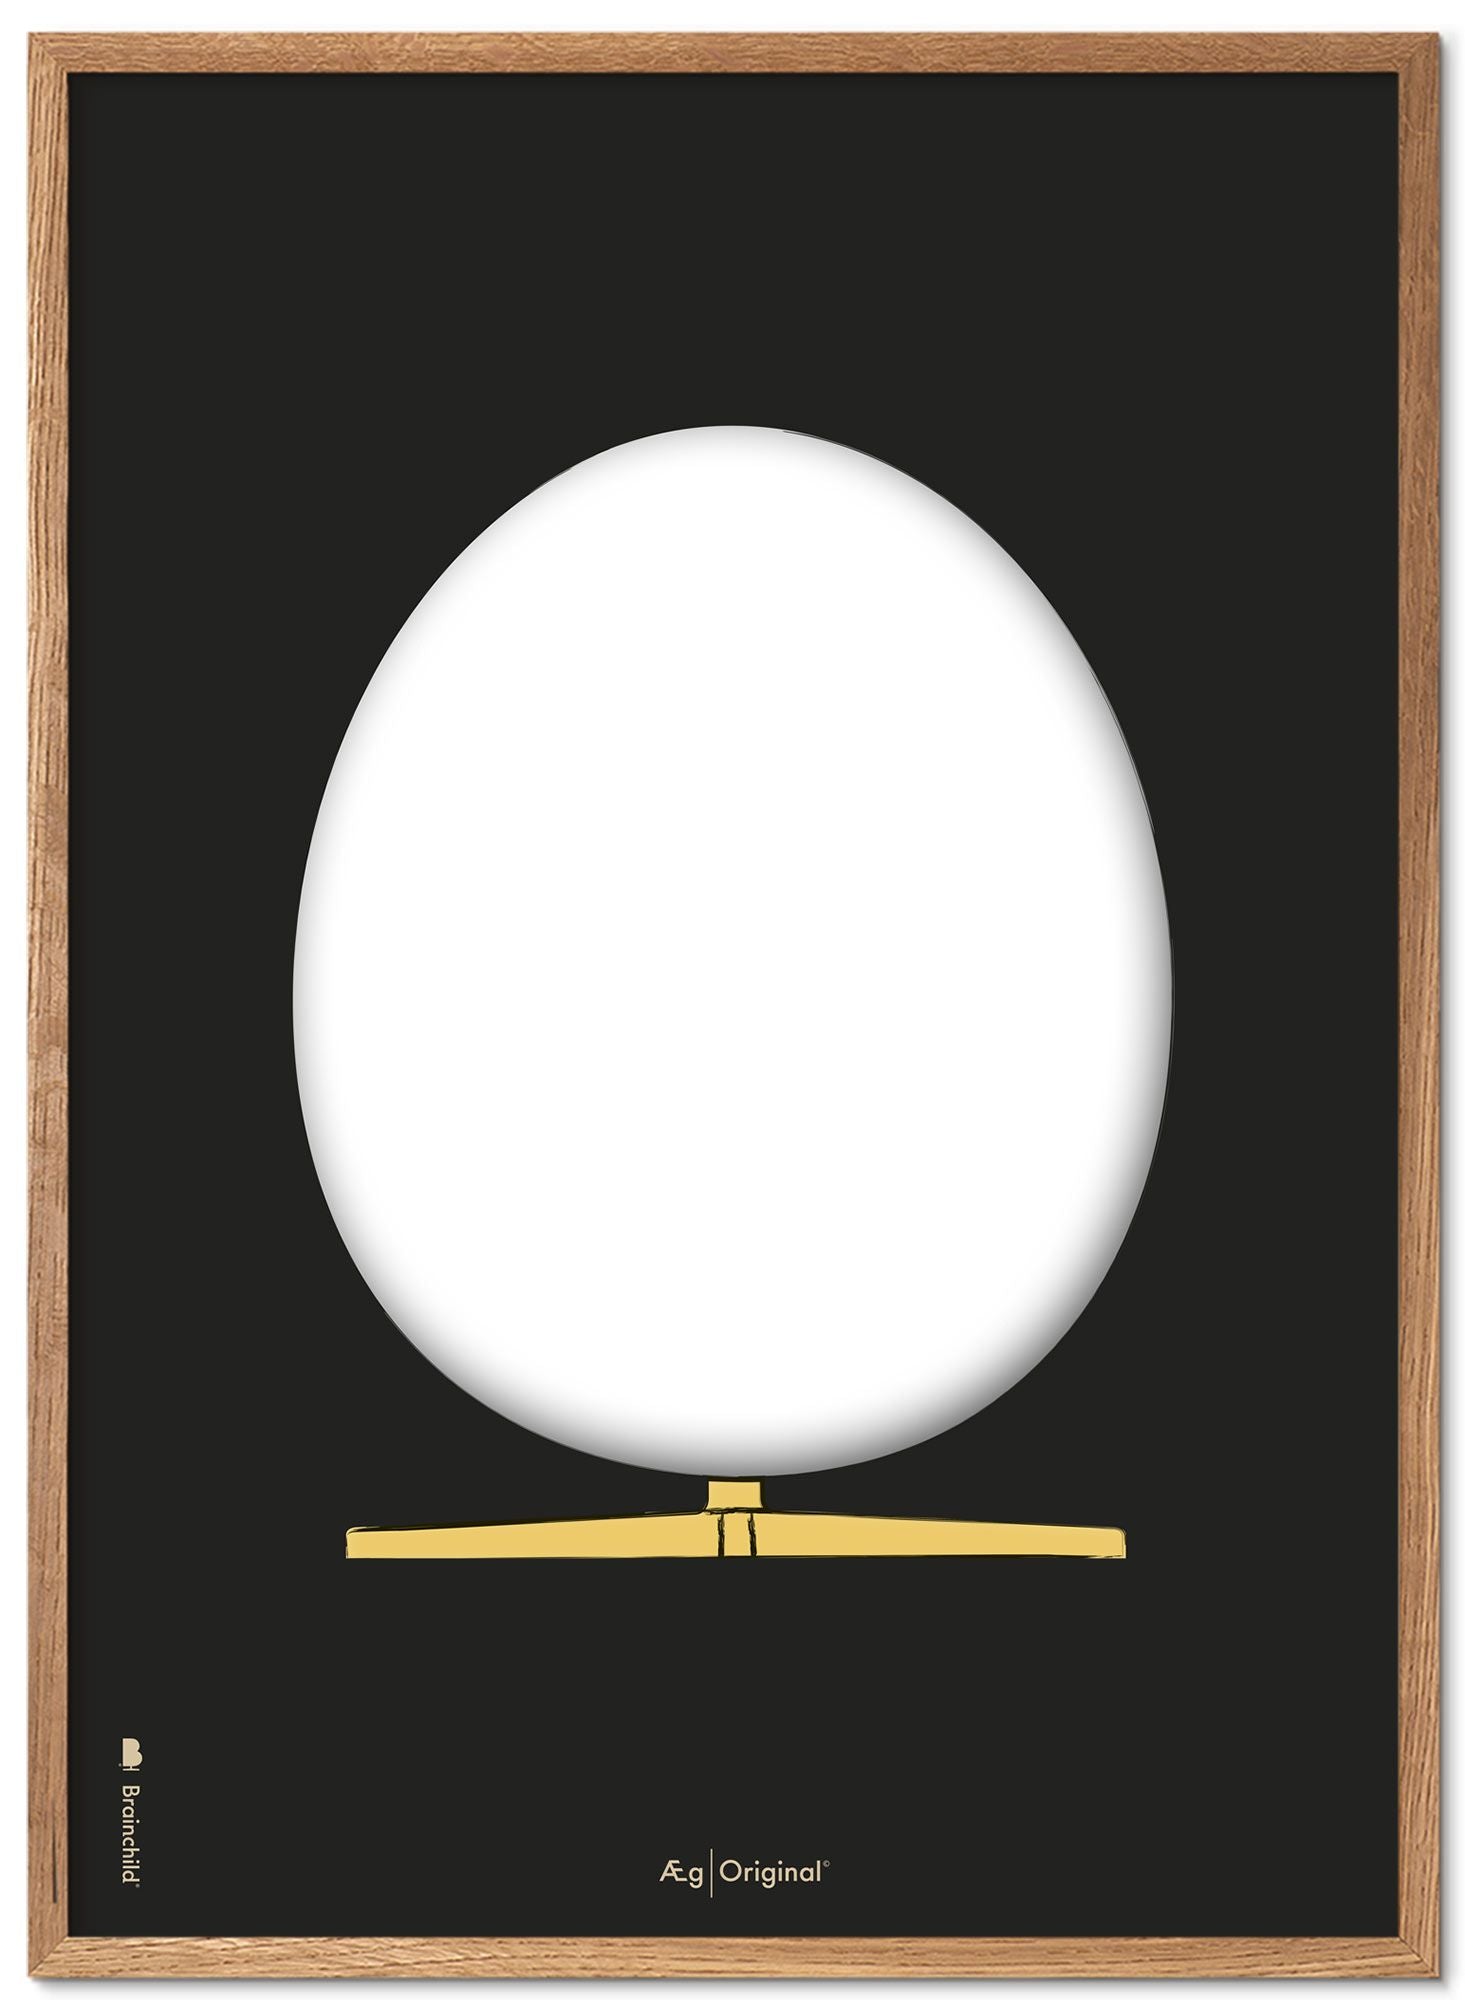 Brainchild The Egg Design Sketch Poster Frame Made Of Light Wood 50x70 Cm, Black Background